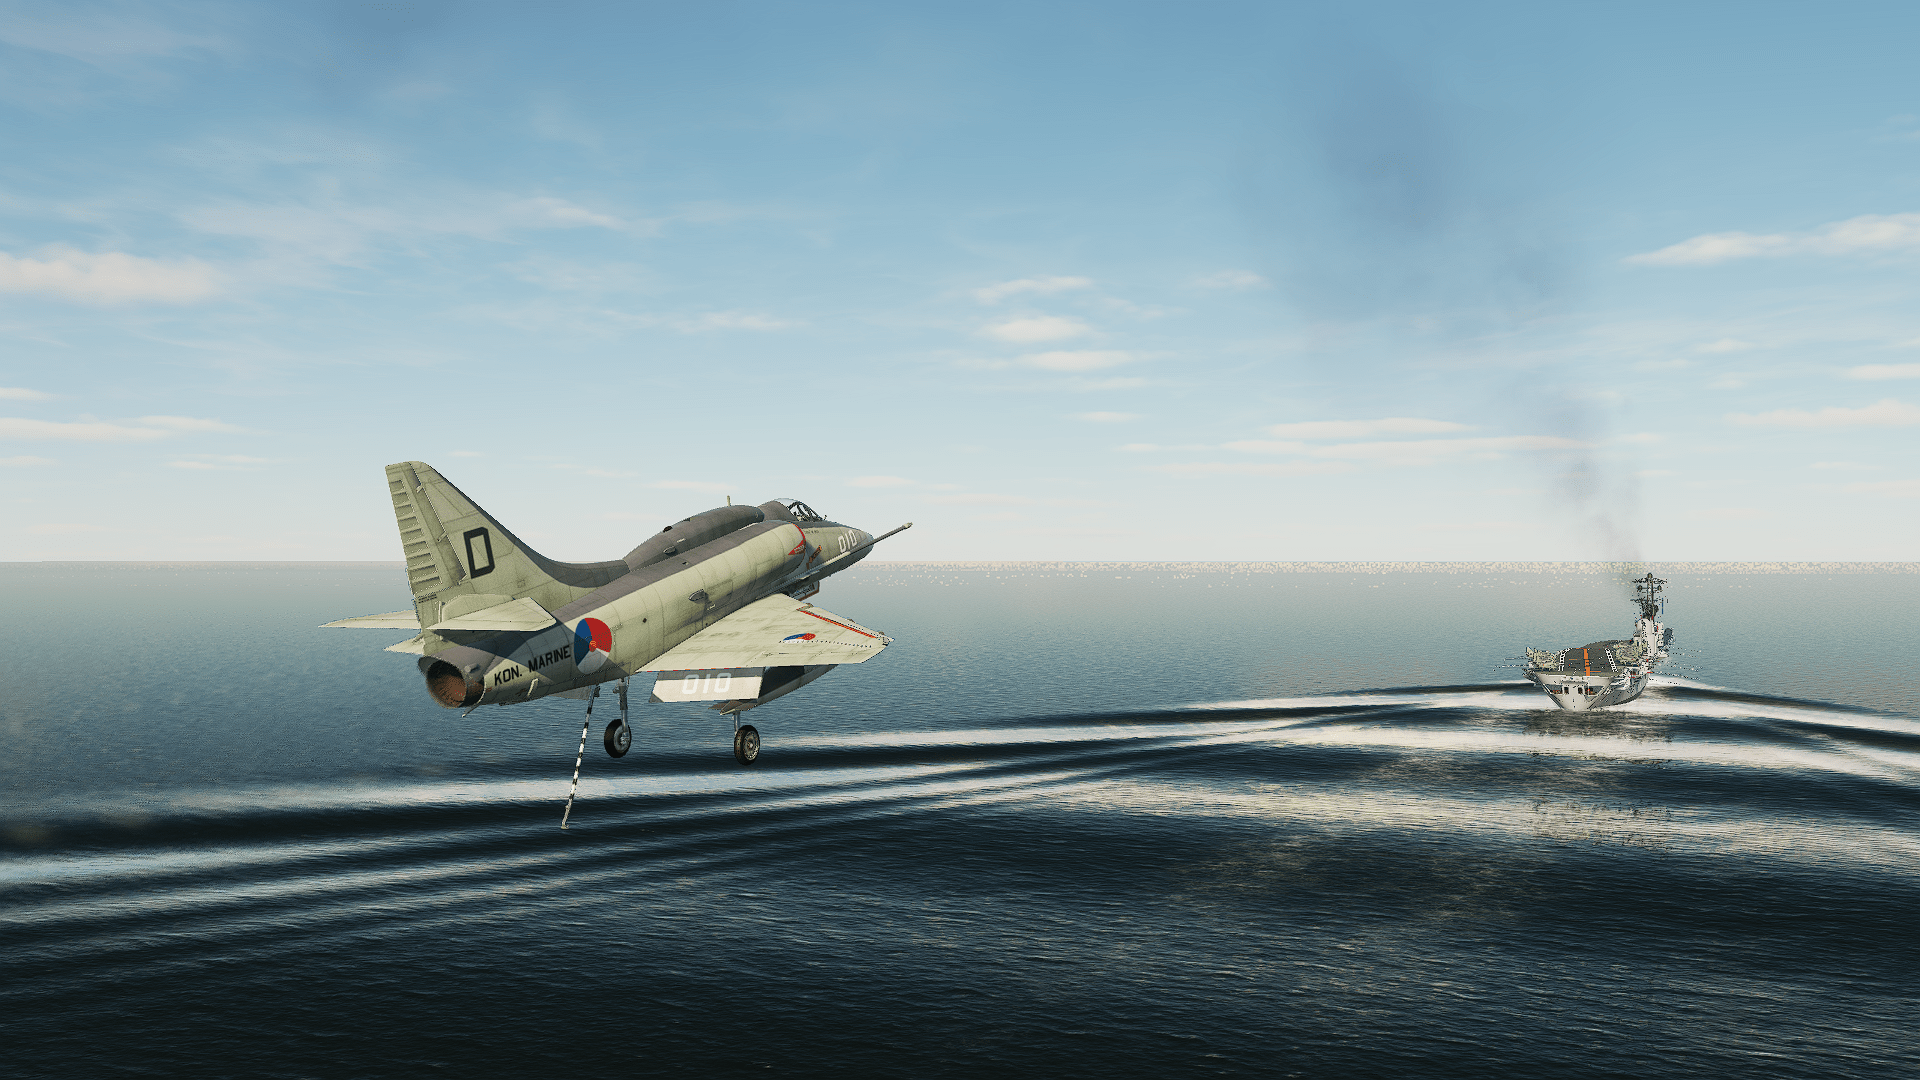 Royal Netherlands Navy A-4E Skyhawk